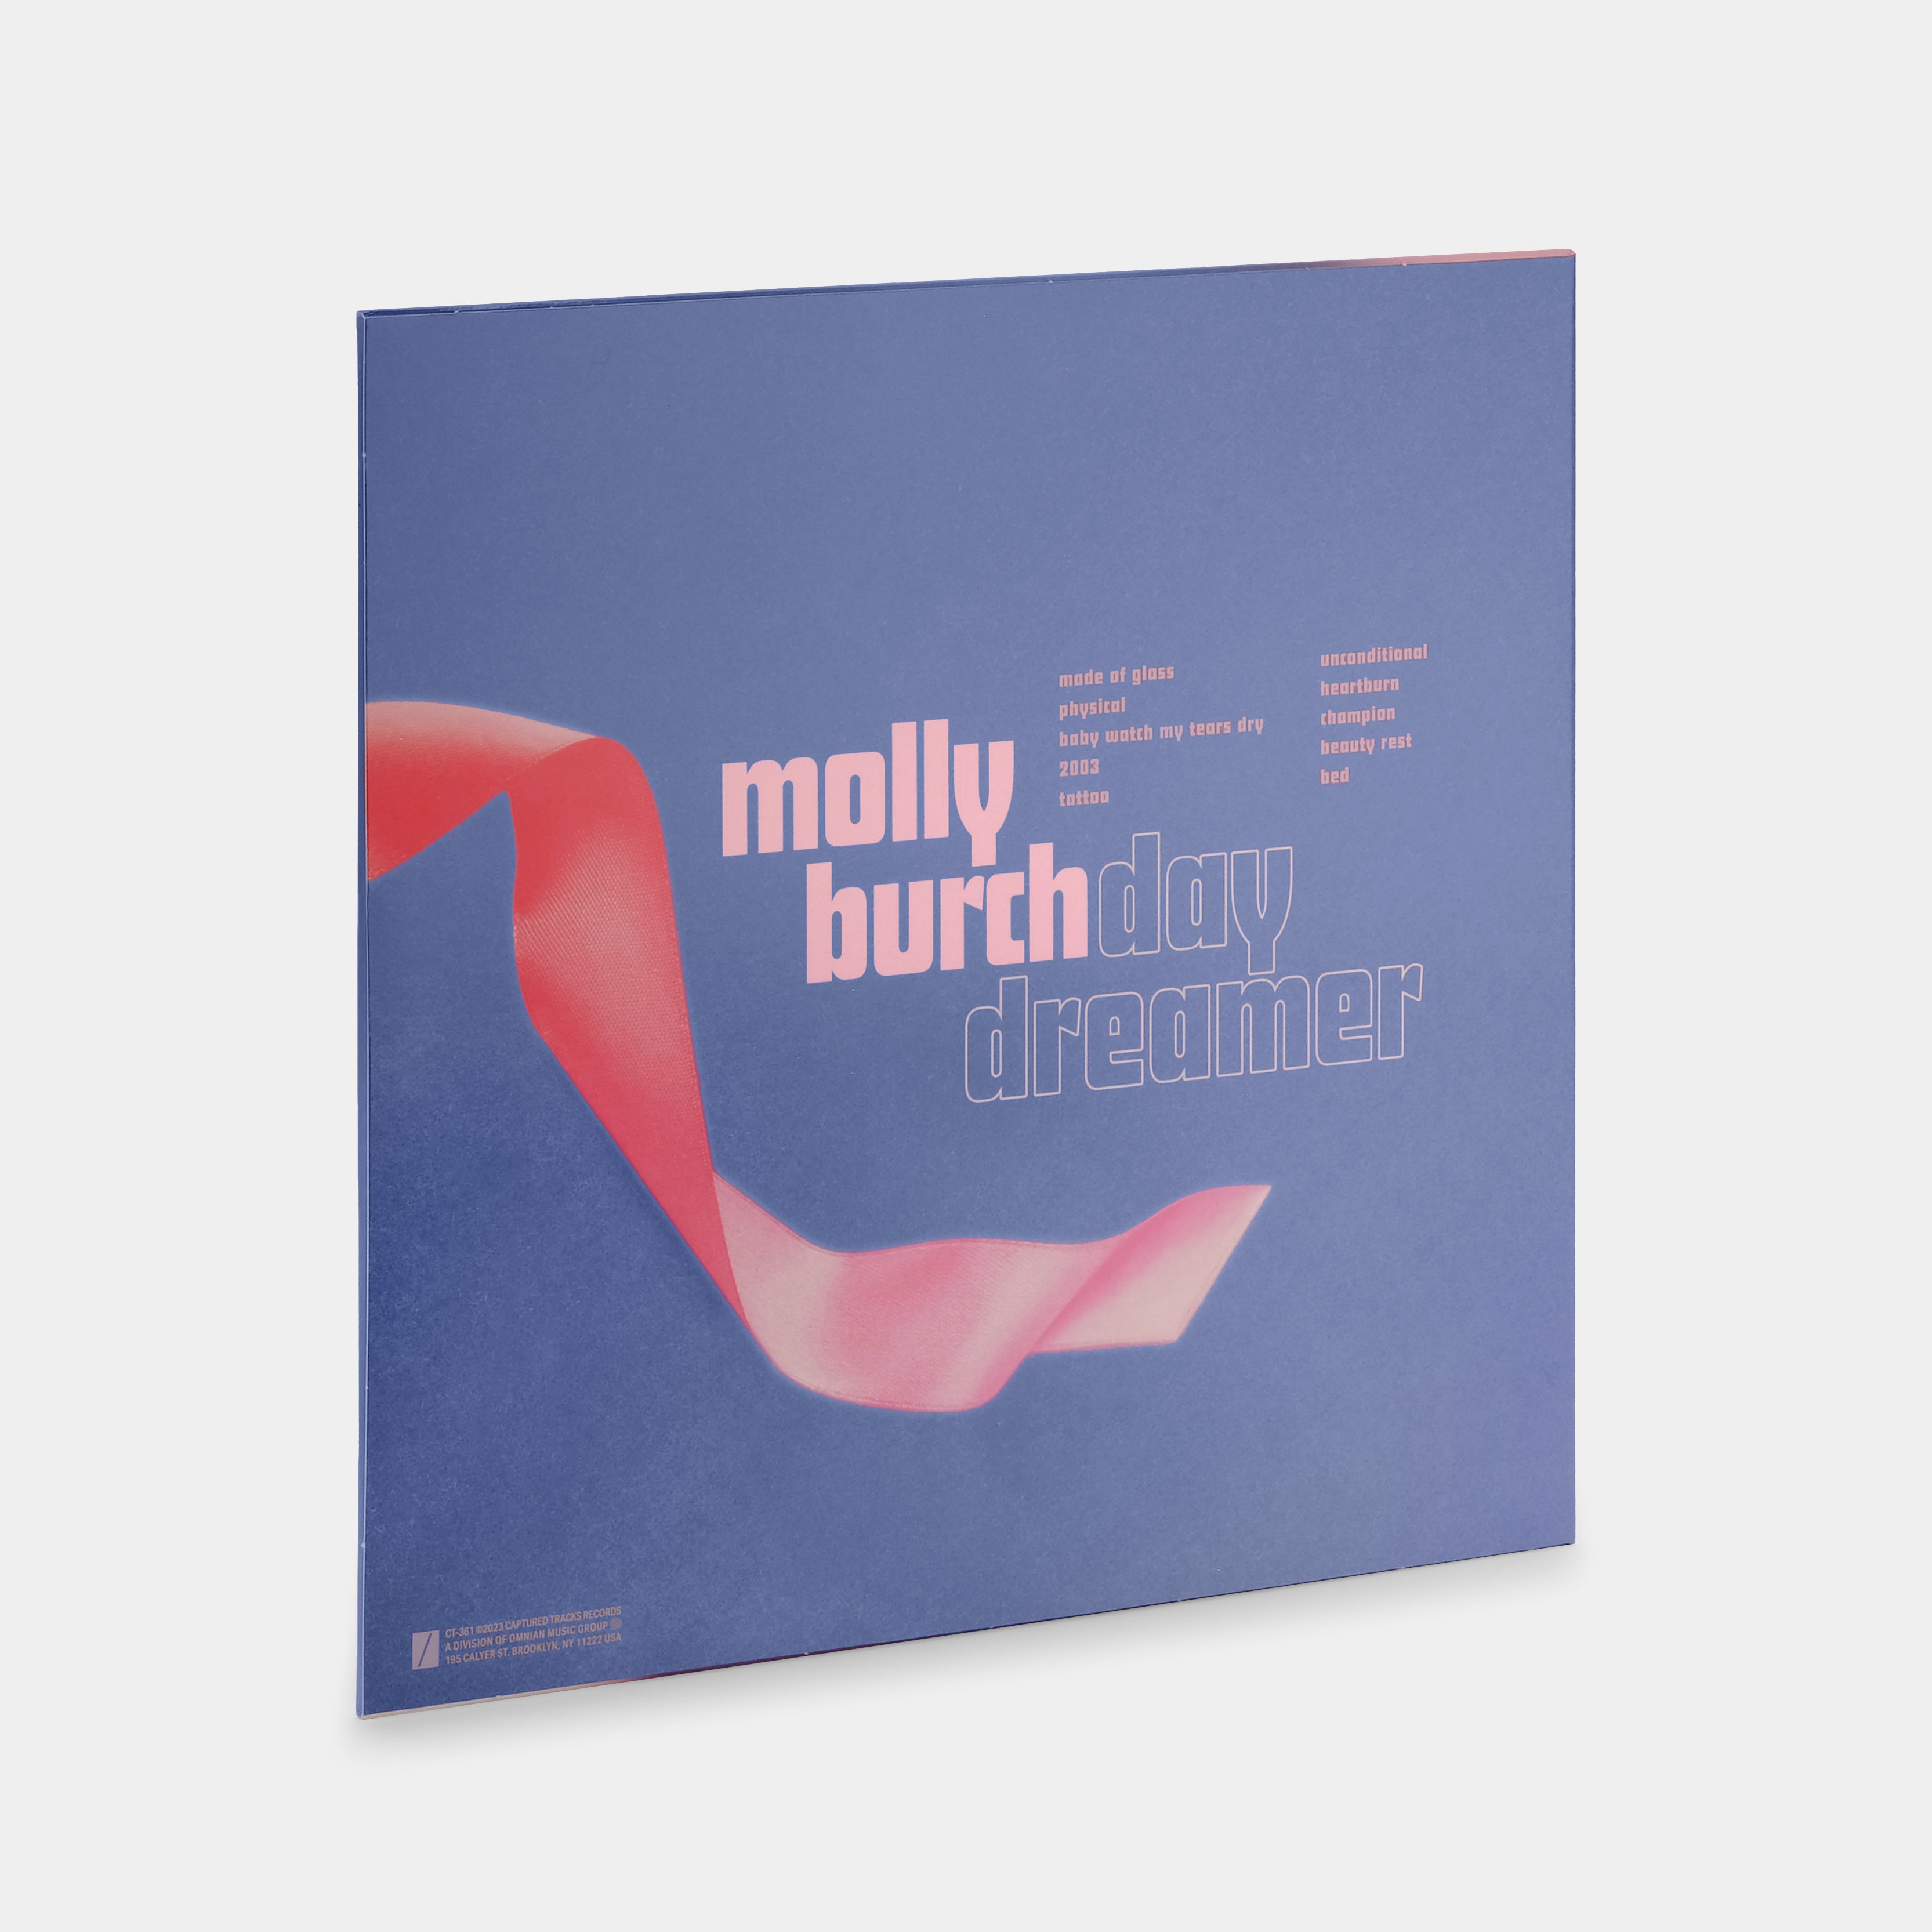 Molly Burch - Daydreamer LP Cotton Candy Vinyl Record